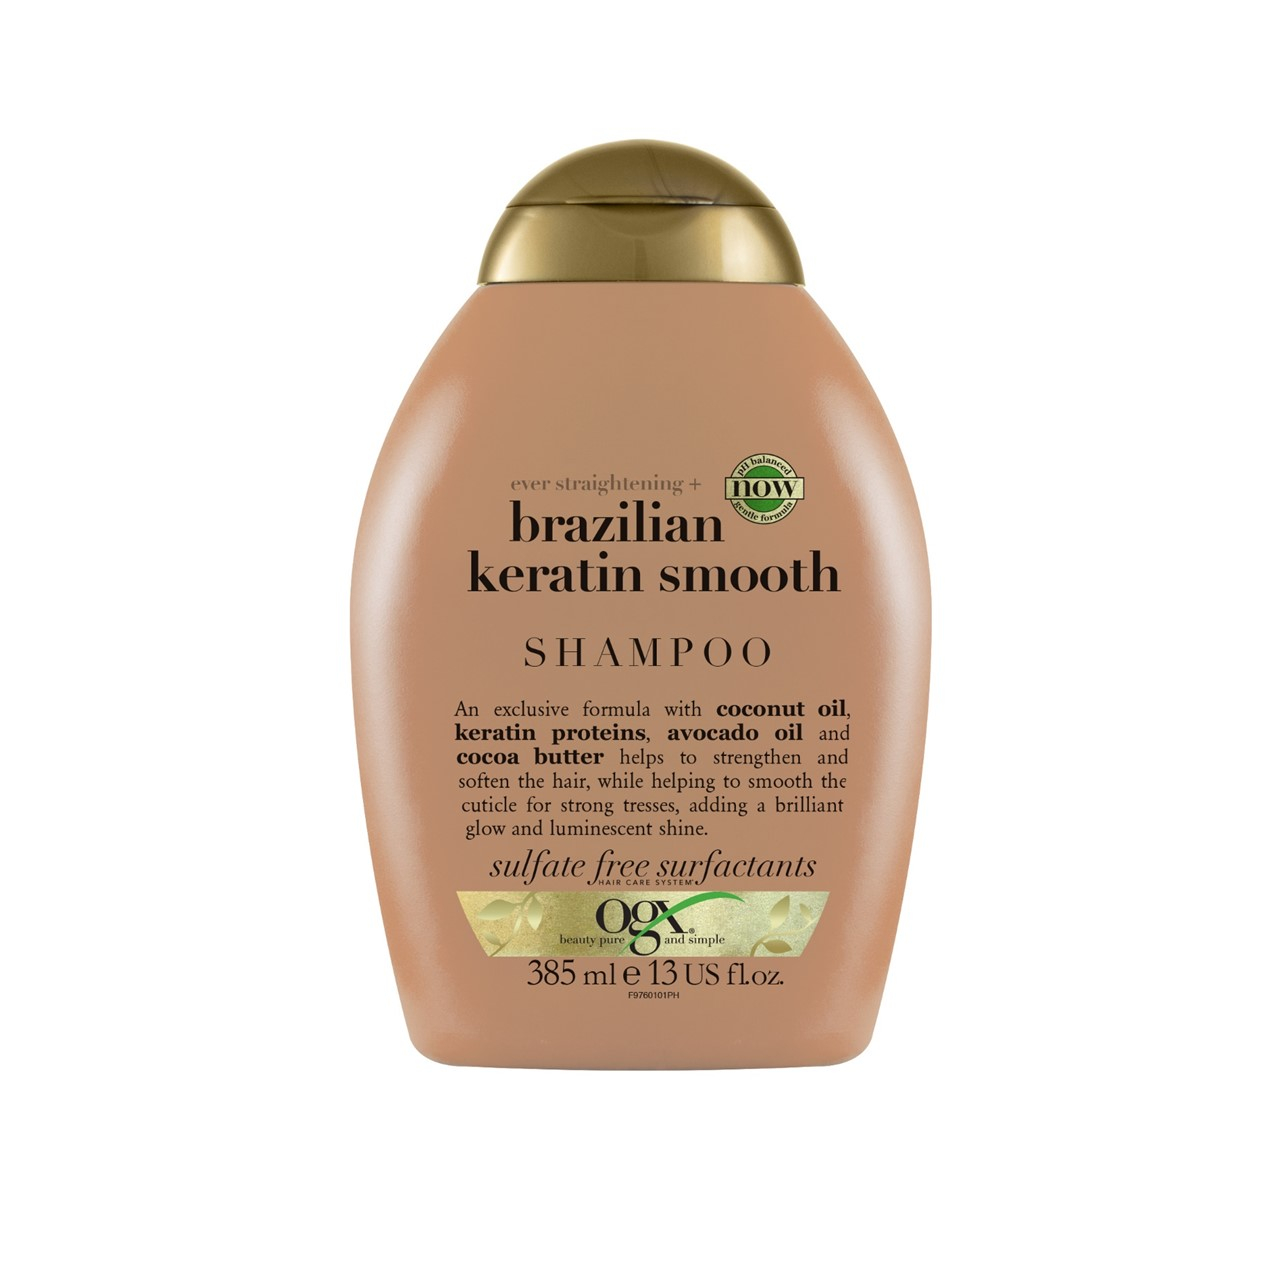 OGX Ever Straightening + Brazilian Keratin Smooth Shampoo 385ml (13 fl oz)